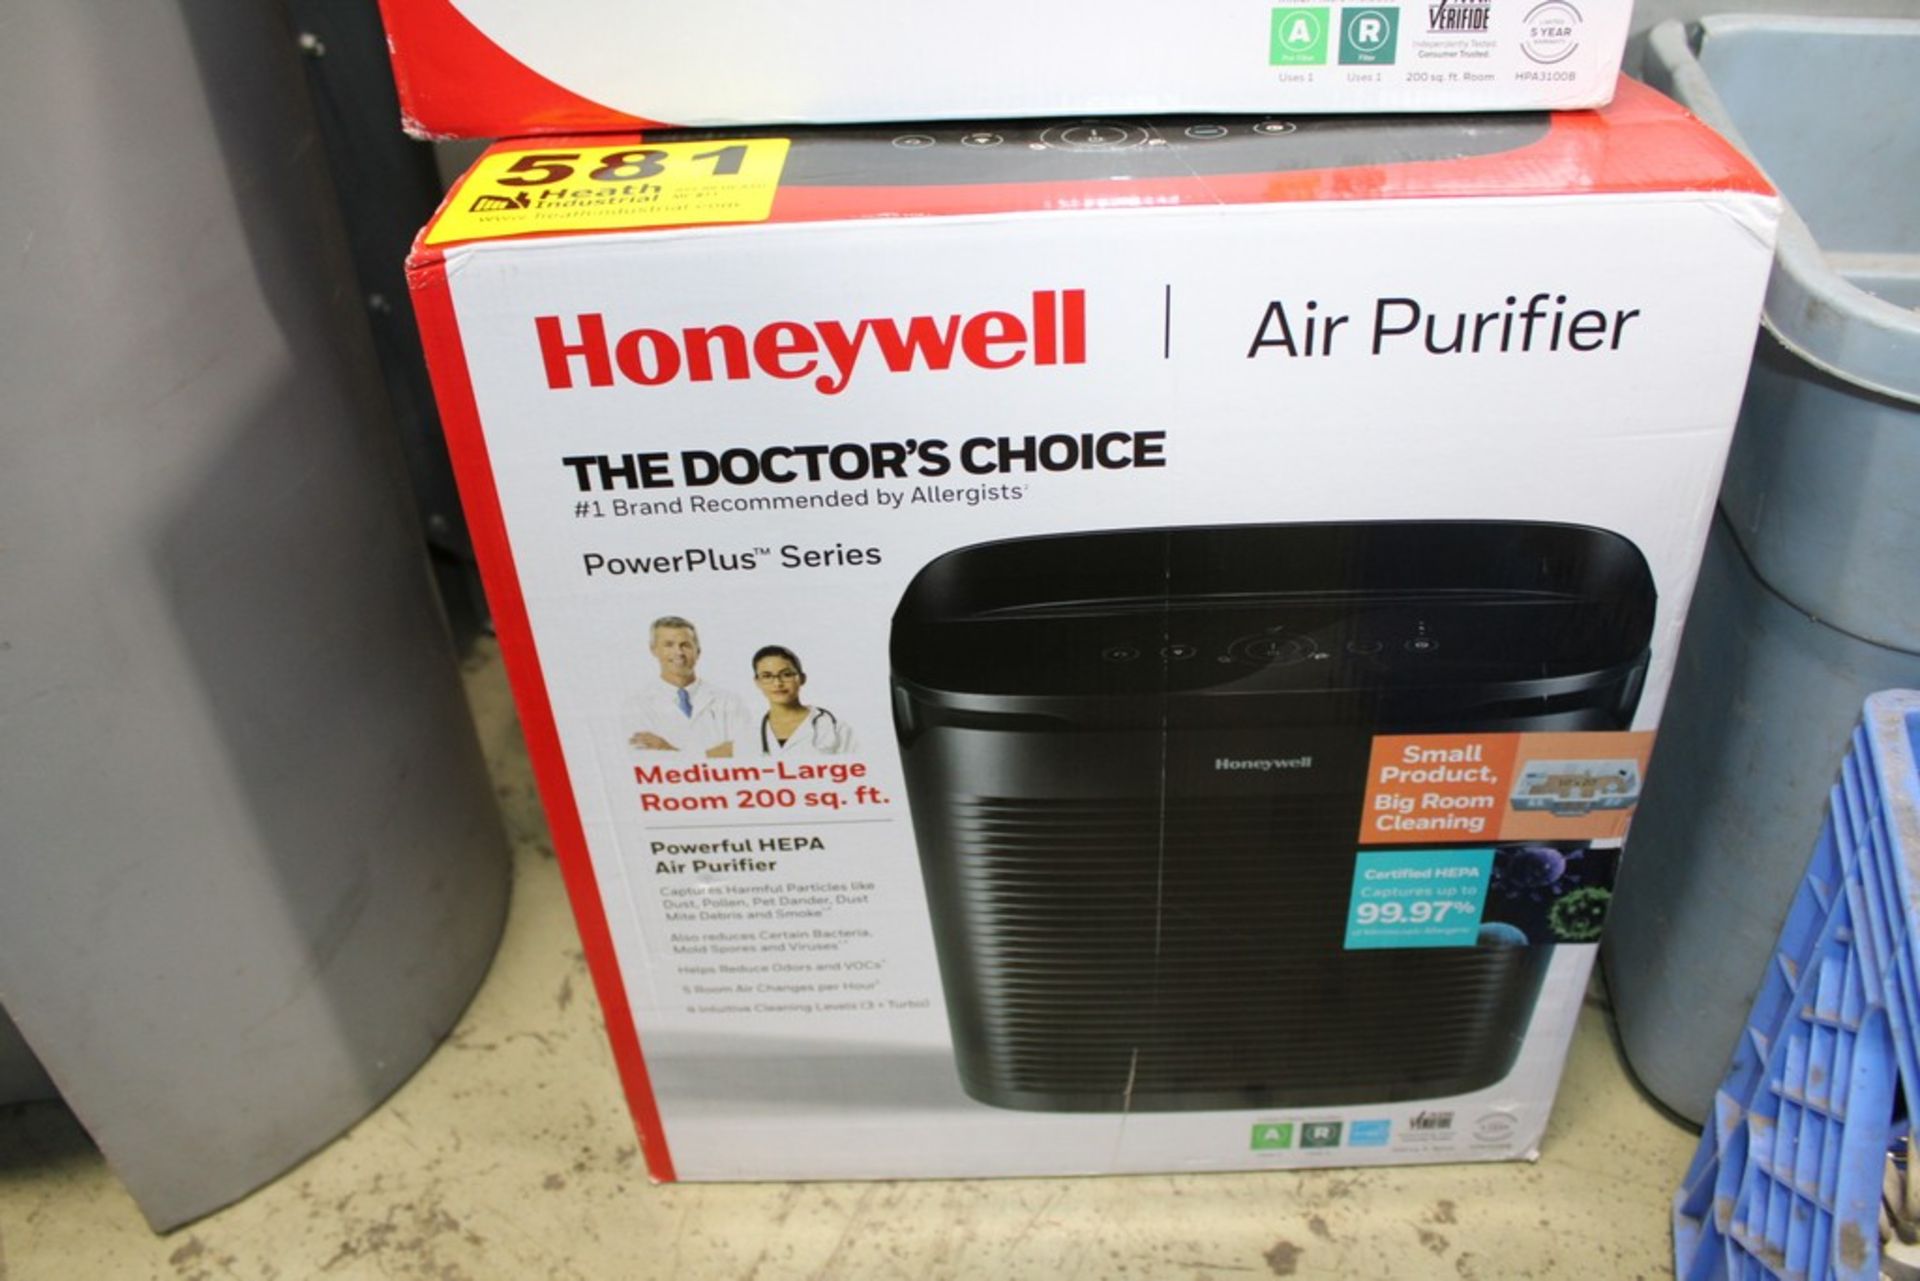 HONEYWELL AIR PURIFIER "DOCTOR'S CHOICE" POWER PLUS SERIES